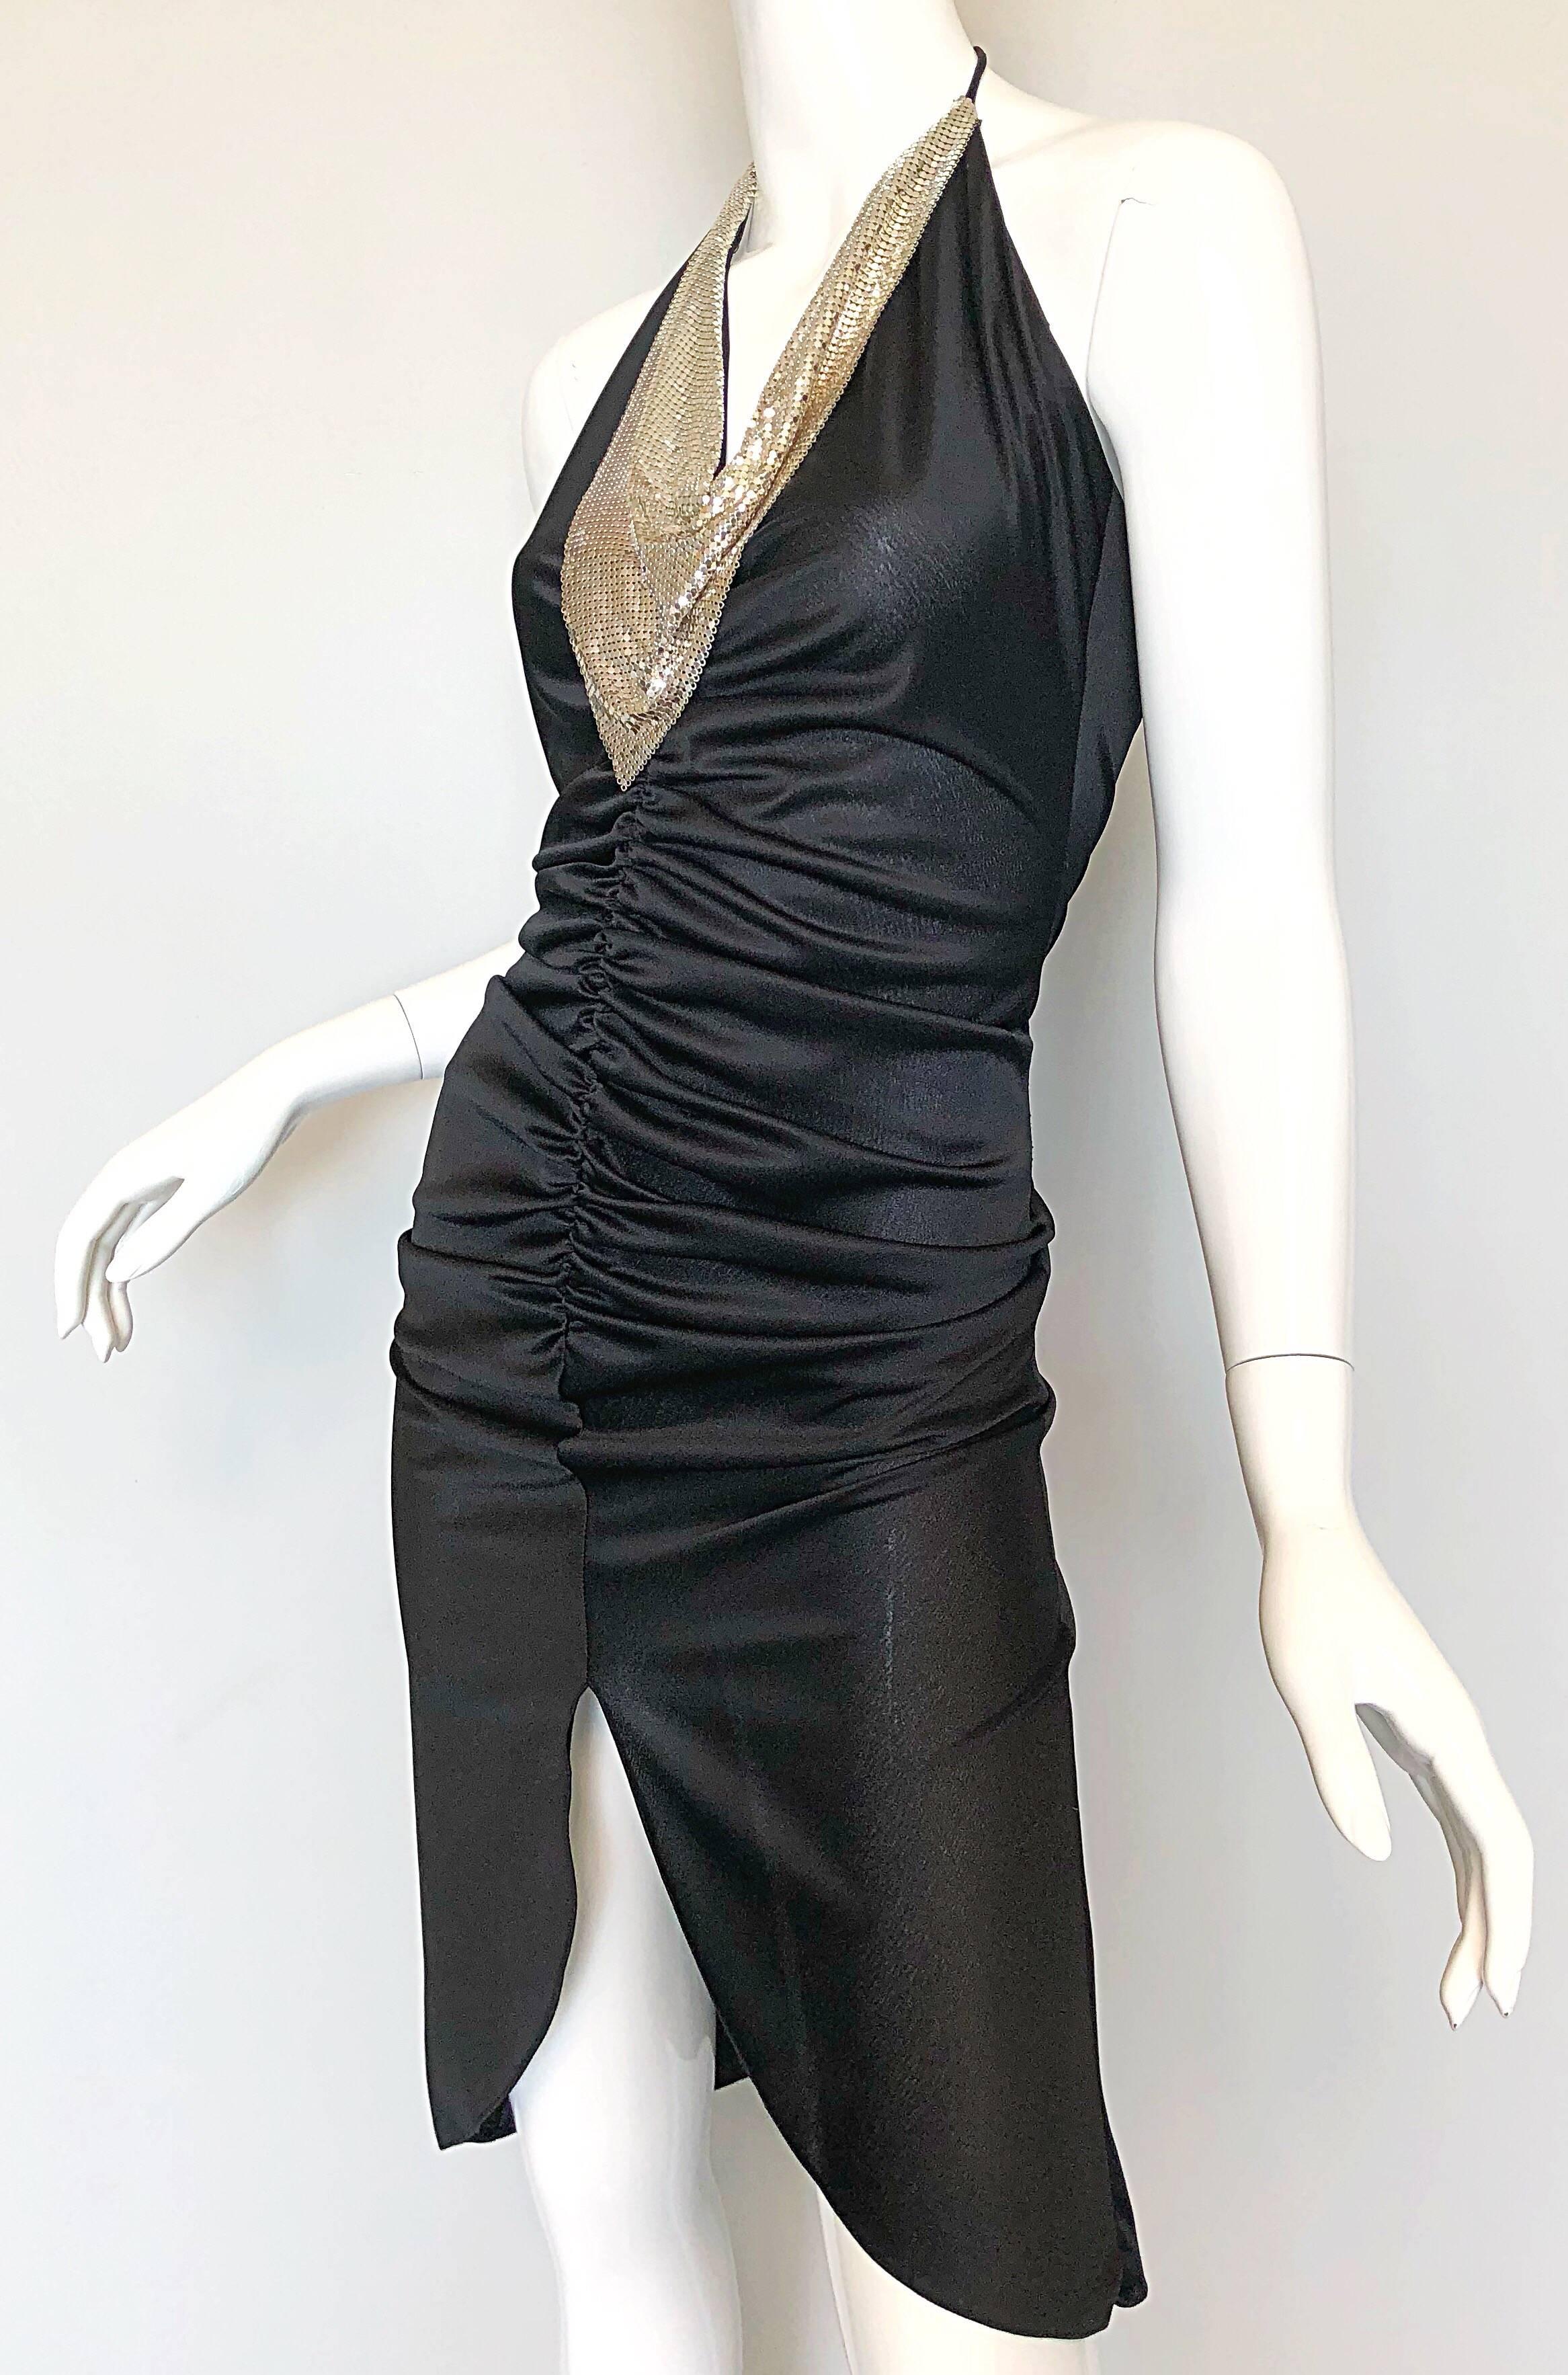 1970s black dress